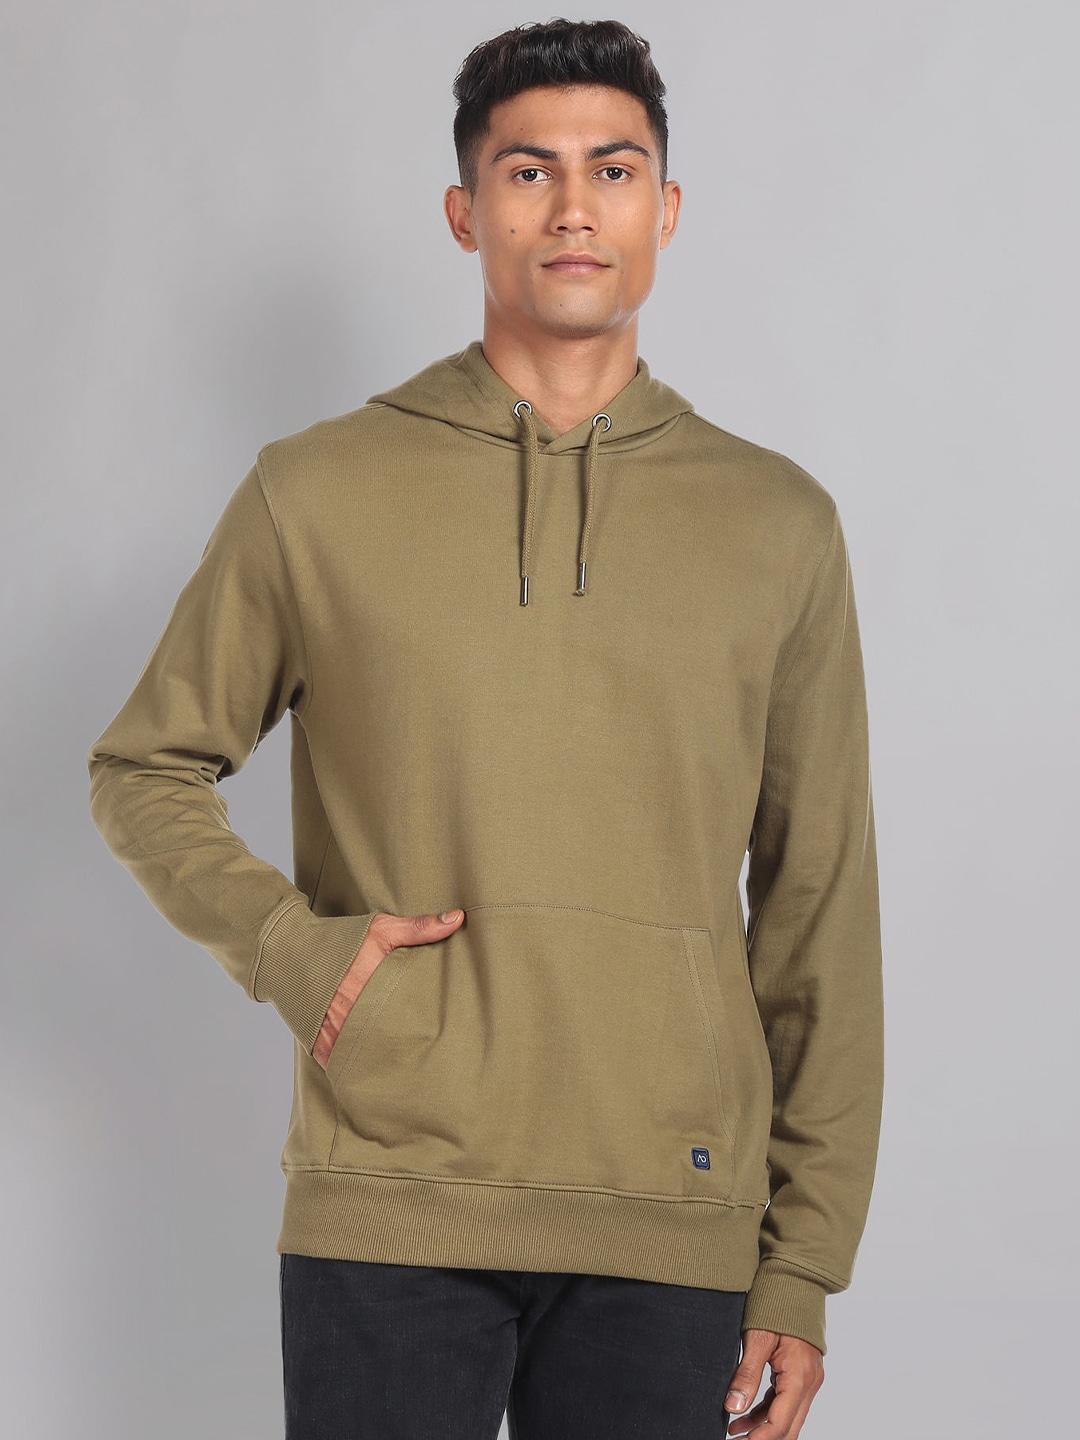 ad by arvind hooded kangaroo pocket cotton pullover sweatshirt